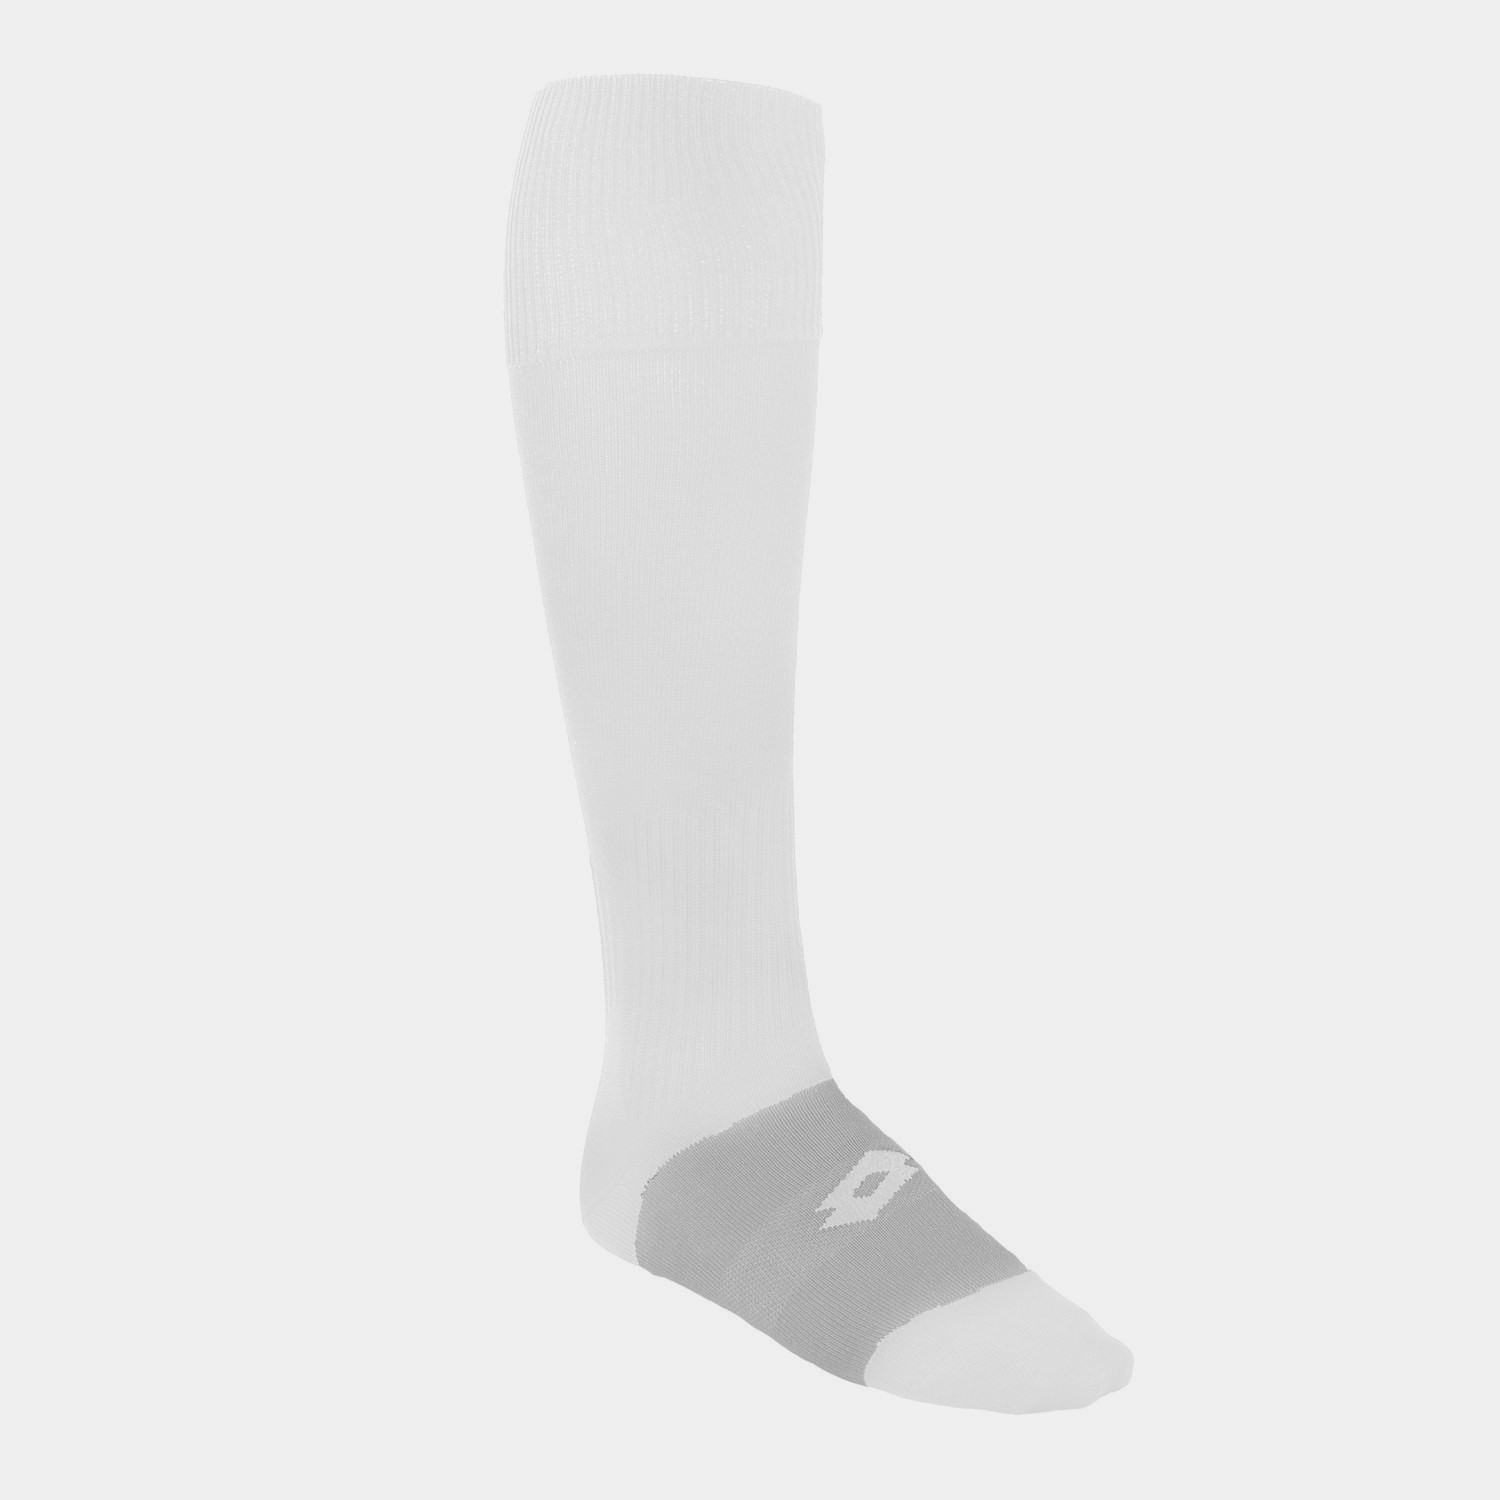 Lotto Delta Αθλητικές Κάλτσες (9000040283_1726)